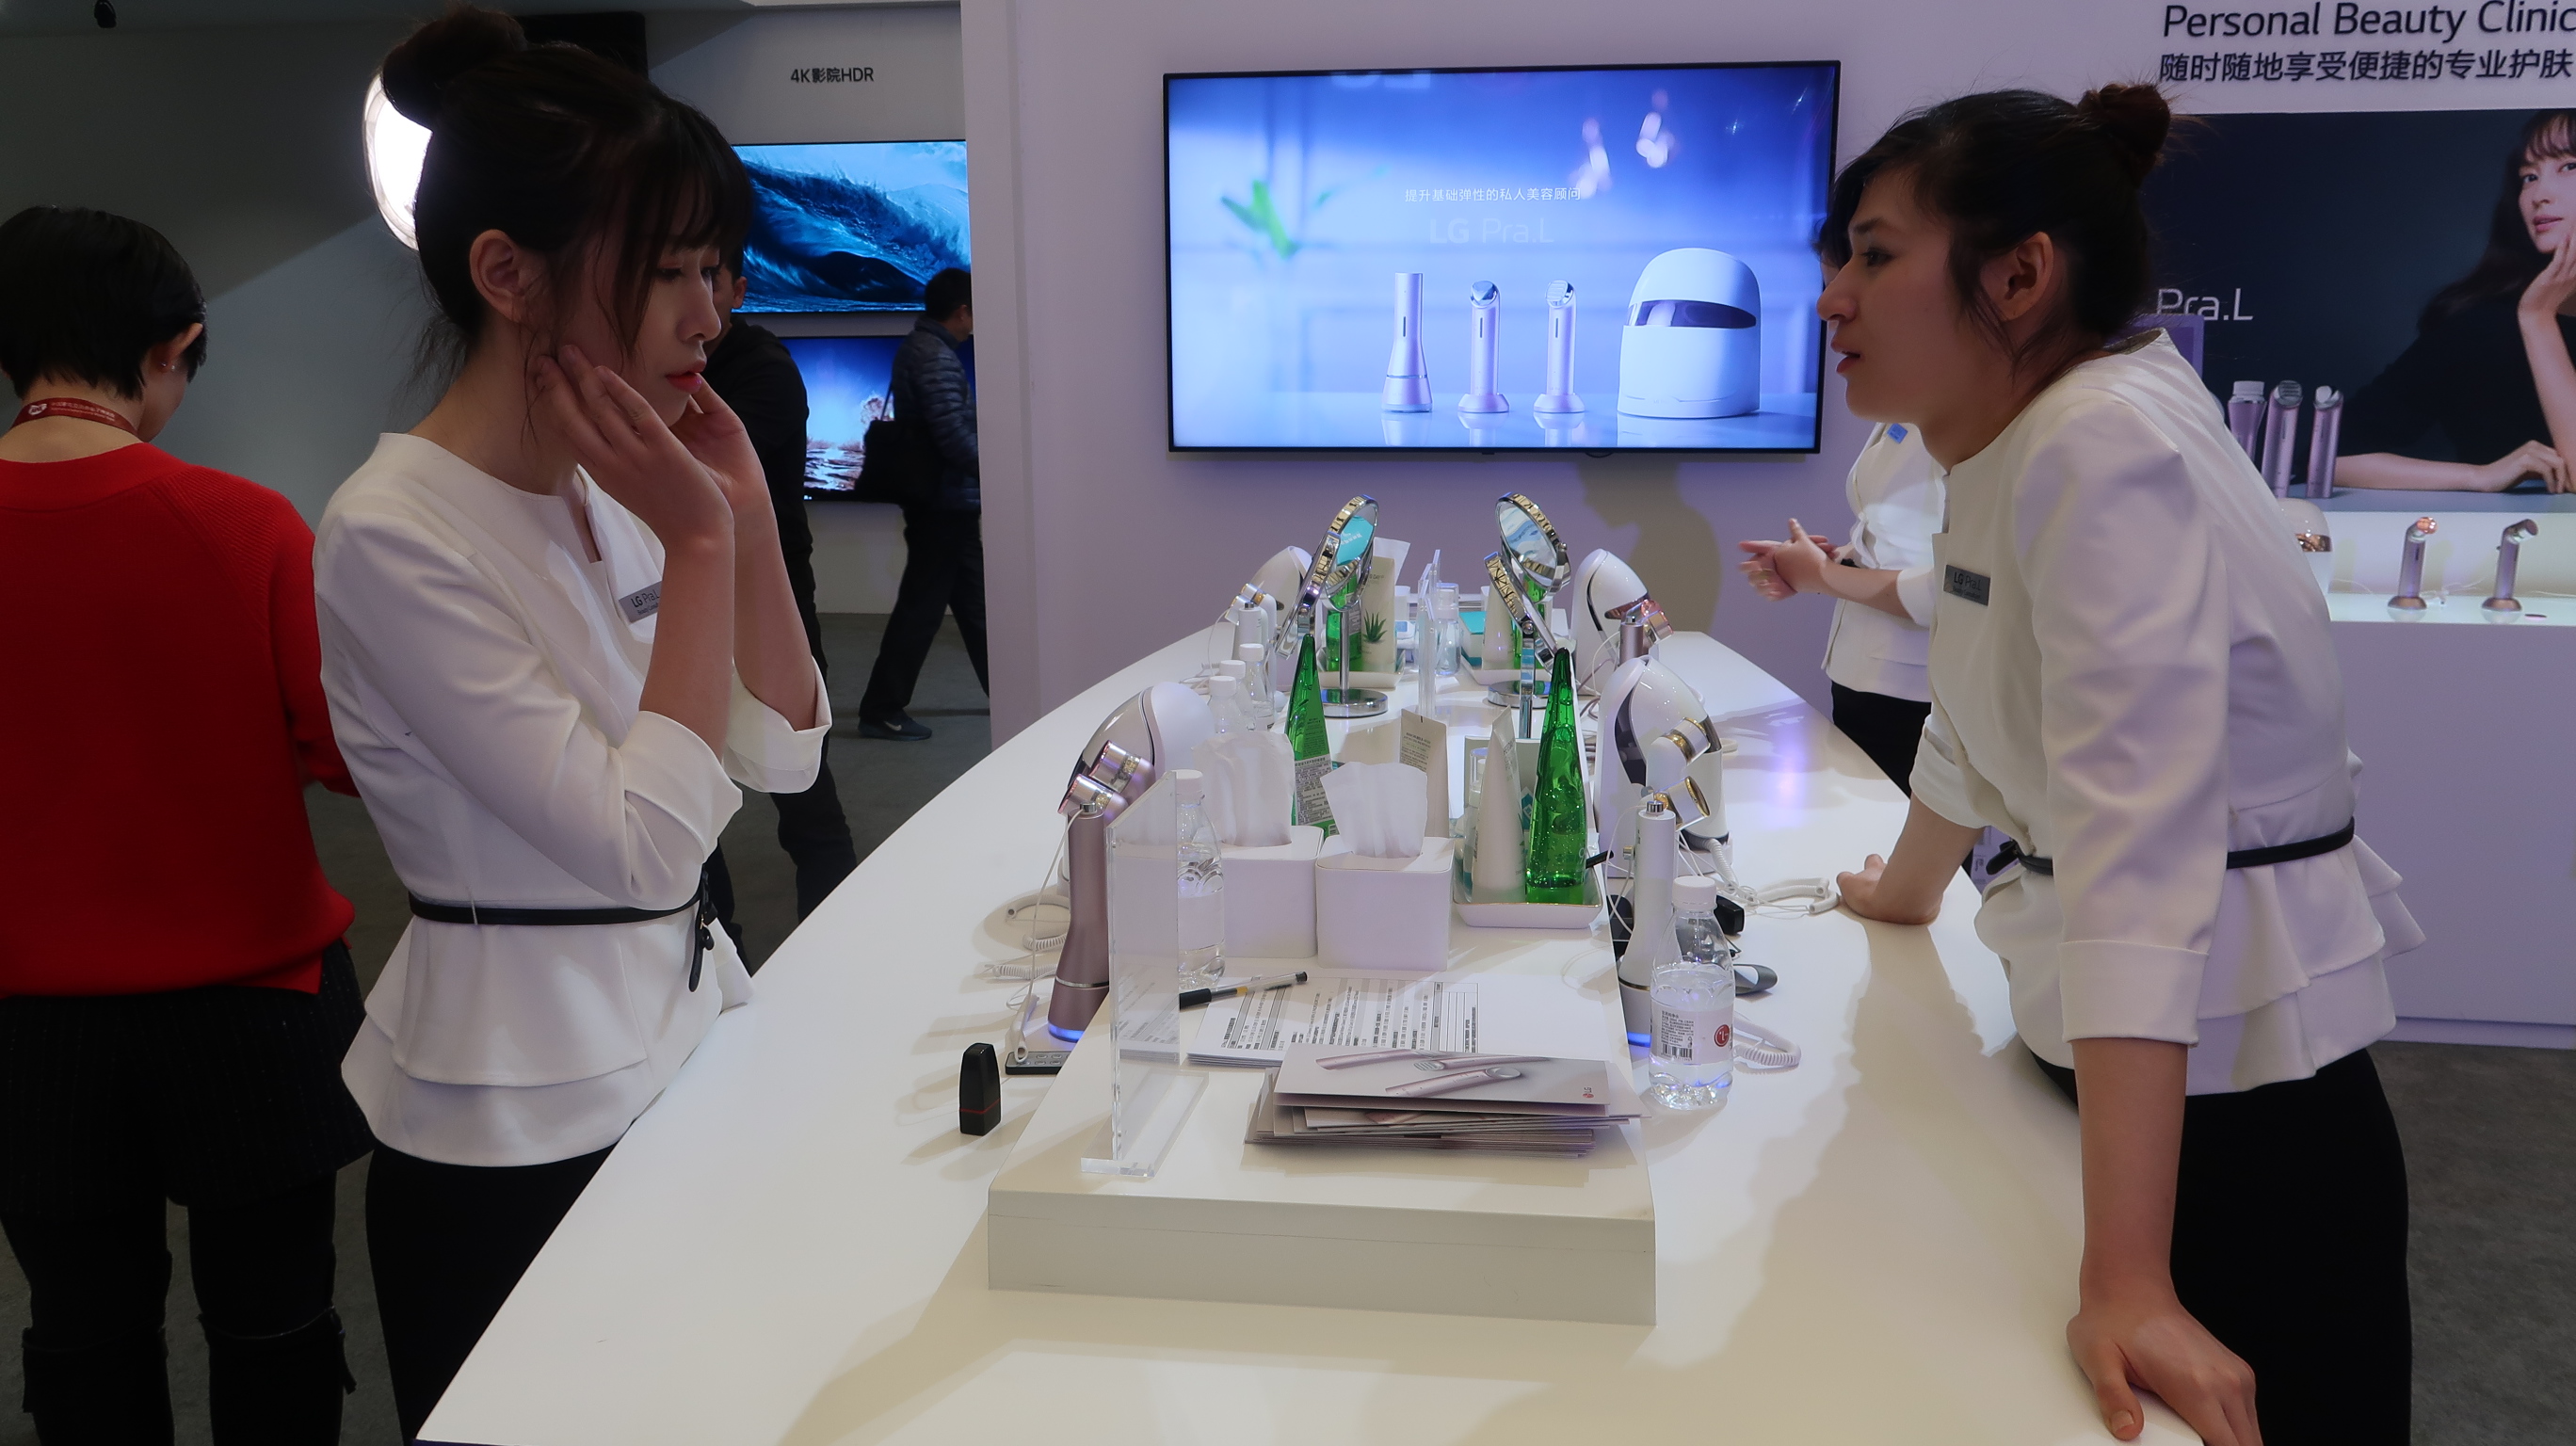 AWE Shanghai 2018 Smart LG Beauty Products